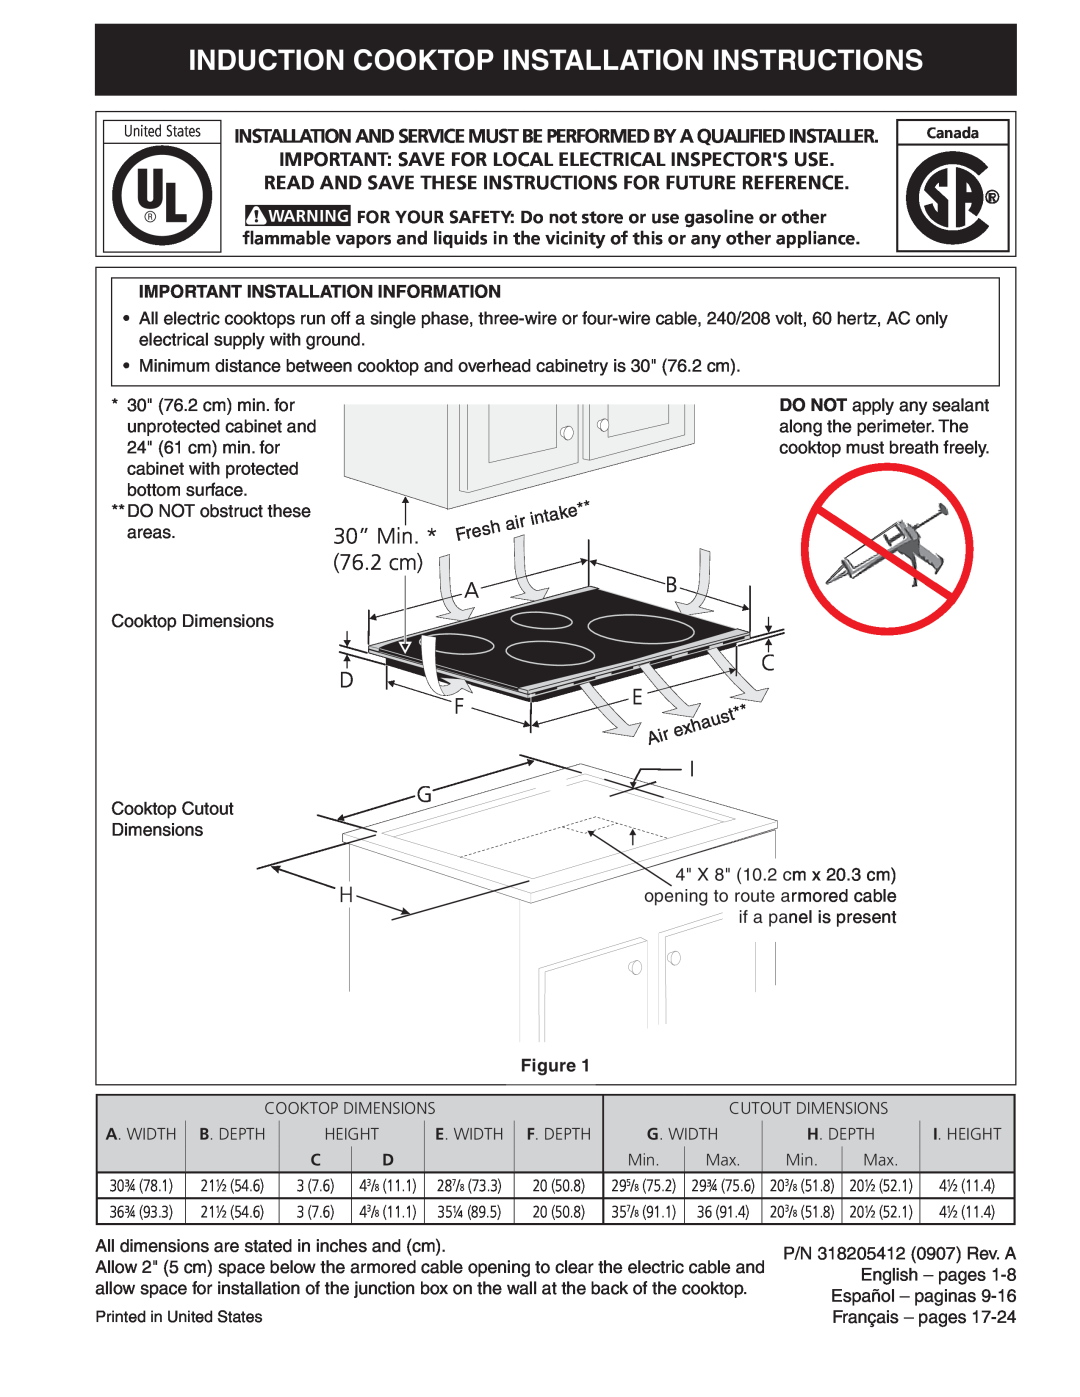 Frigidaire 318205412 installation instructions induction COOKTOP INSTALLATION INSTRUCTIONS 